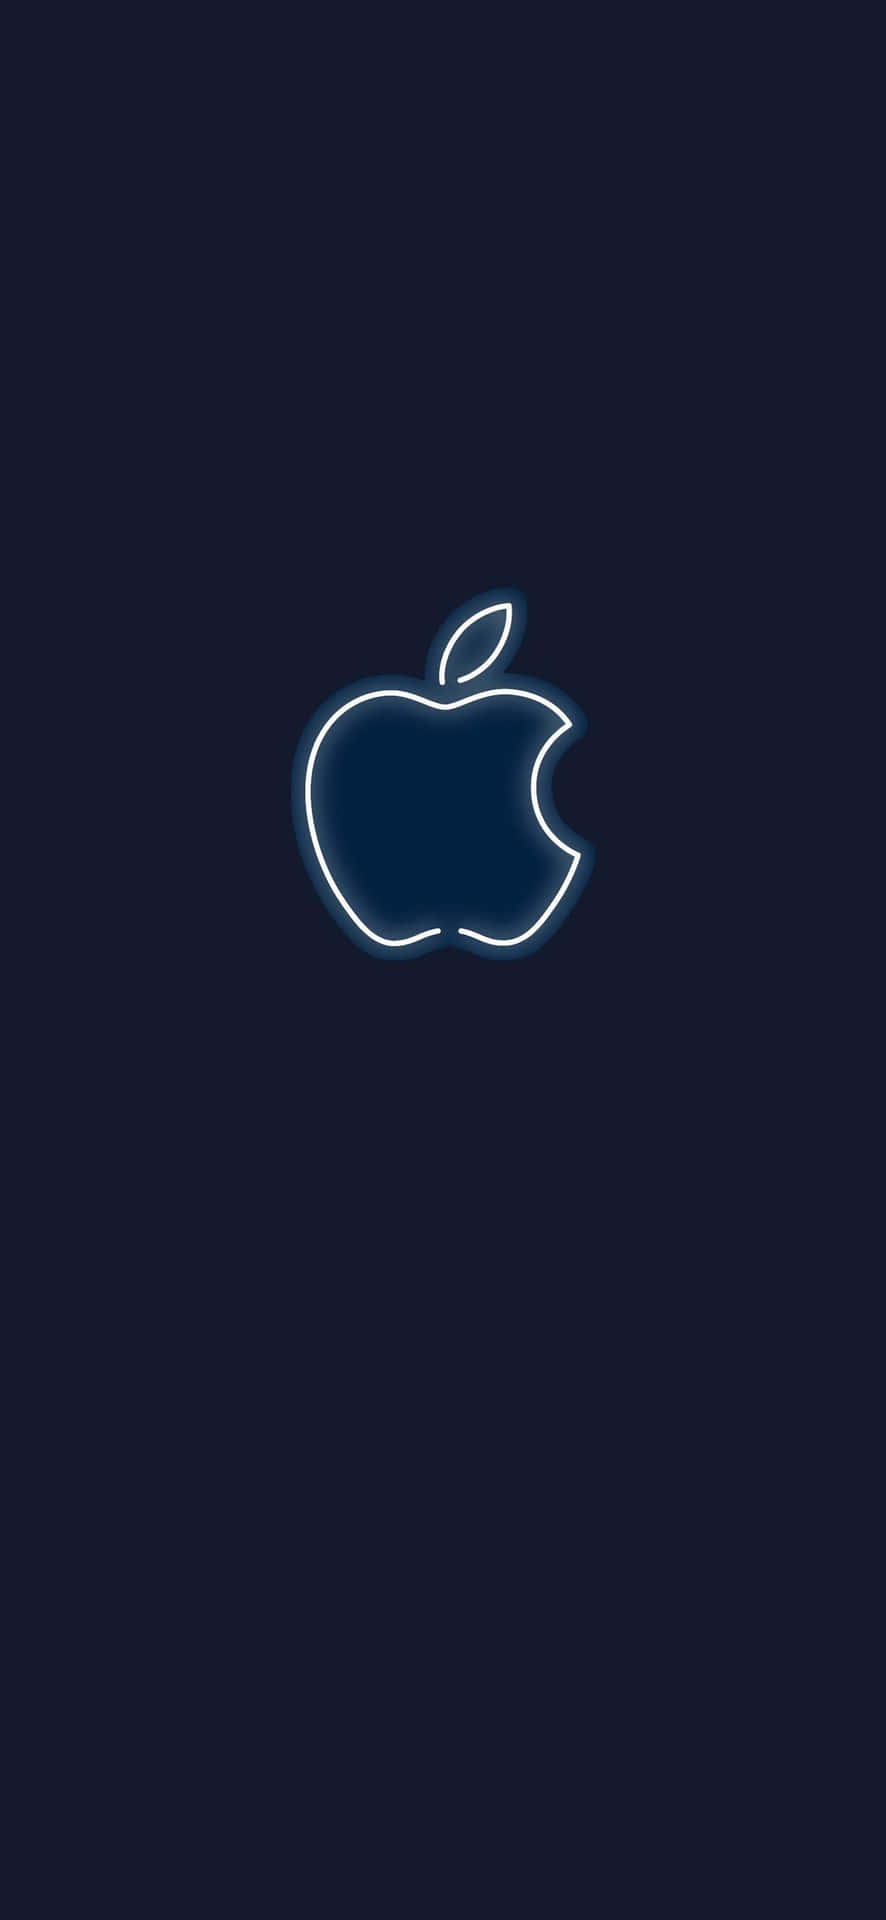 Logobianco Neon Incredibile Hd Per Iphone Di Apple. Sfondo